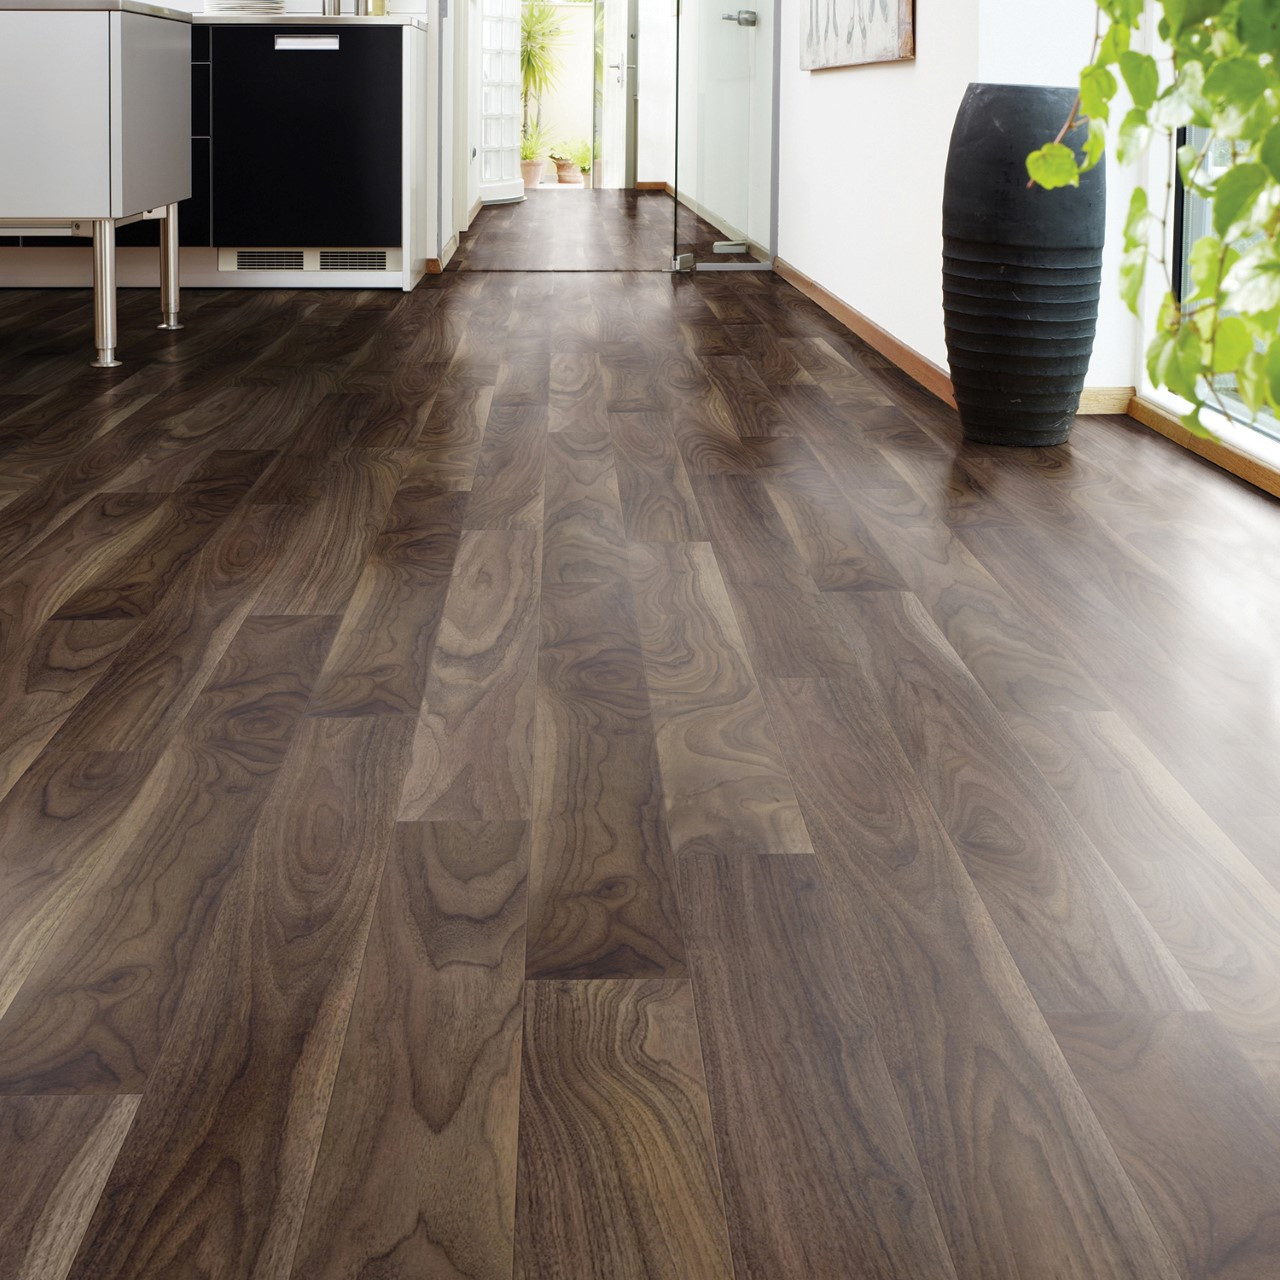 kraus hardwood flooring reviews of kraus laminate flooring multi flooring inc intended for desert oak